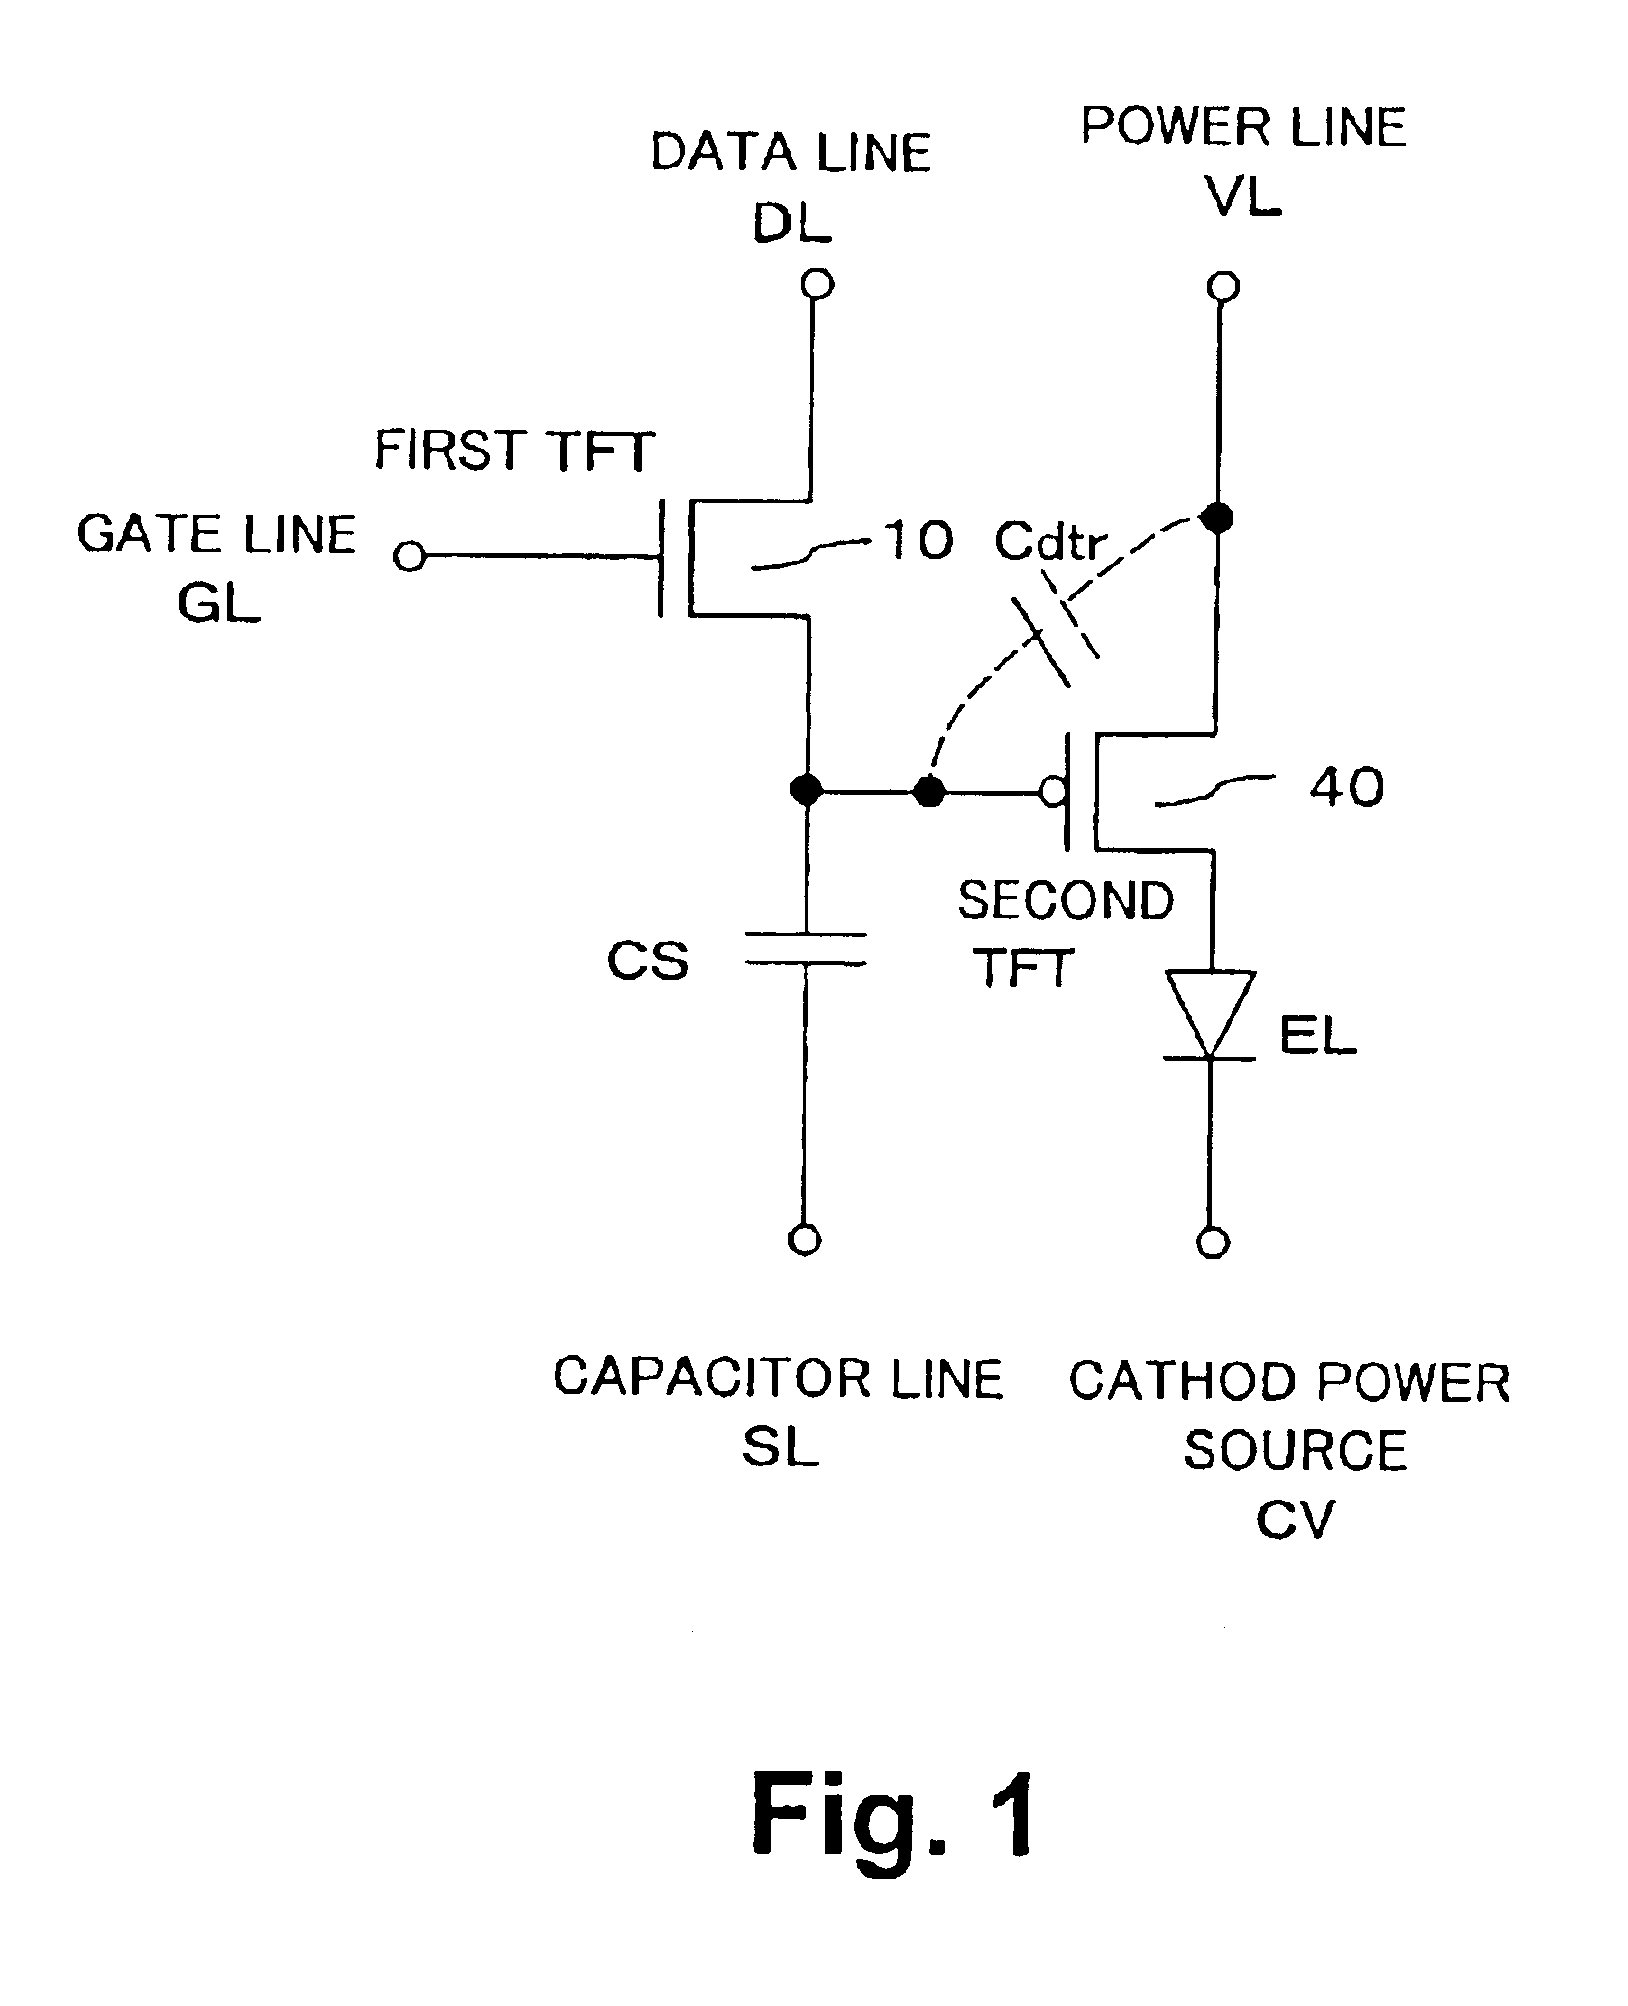 Transistor circuit